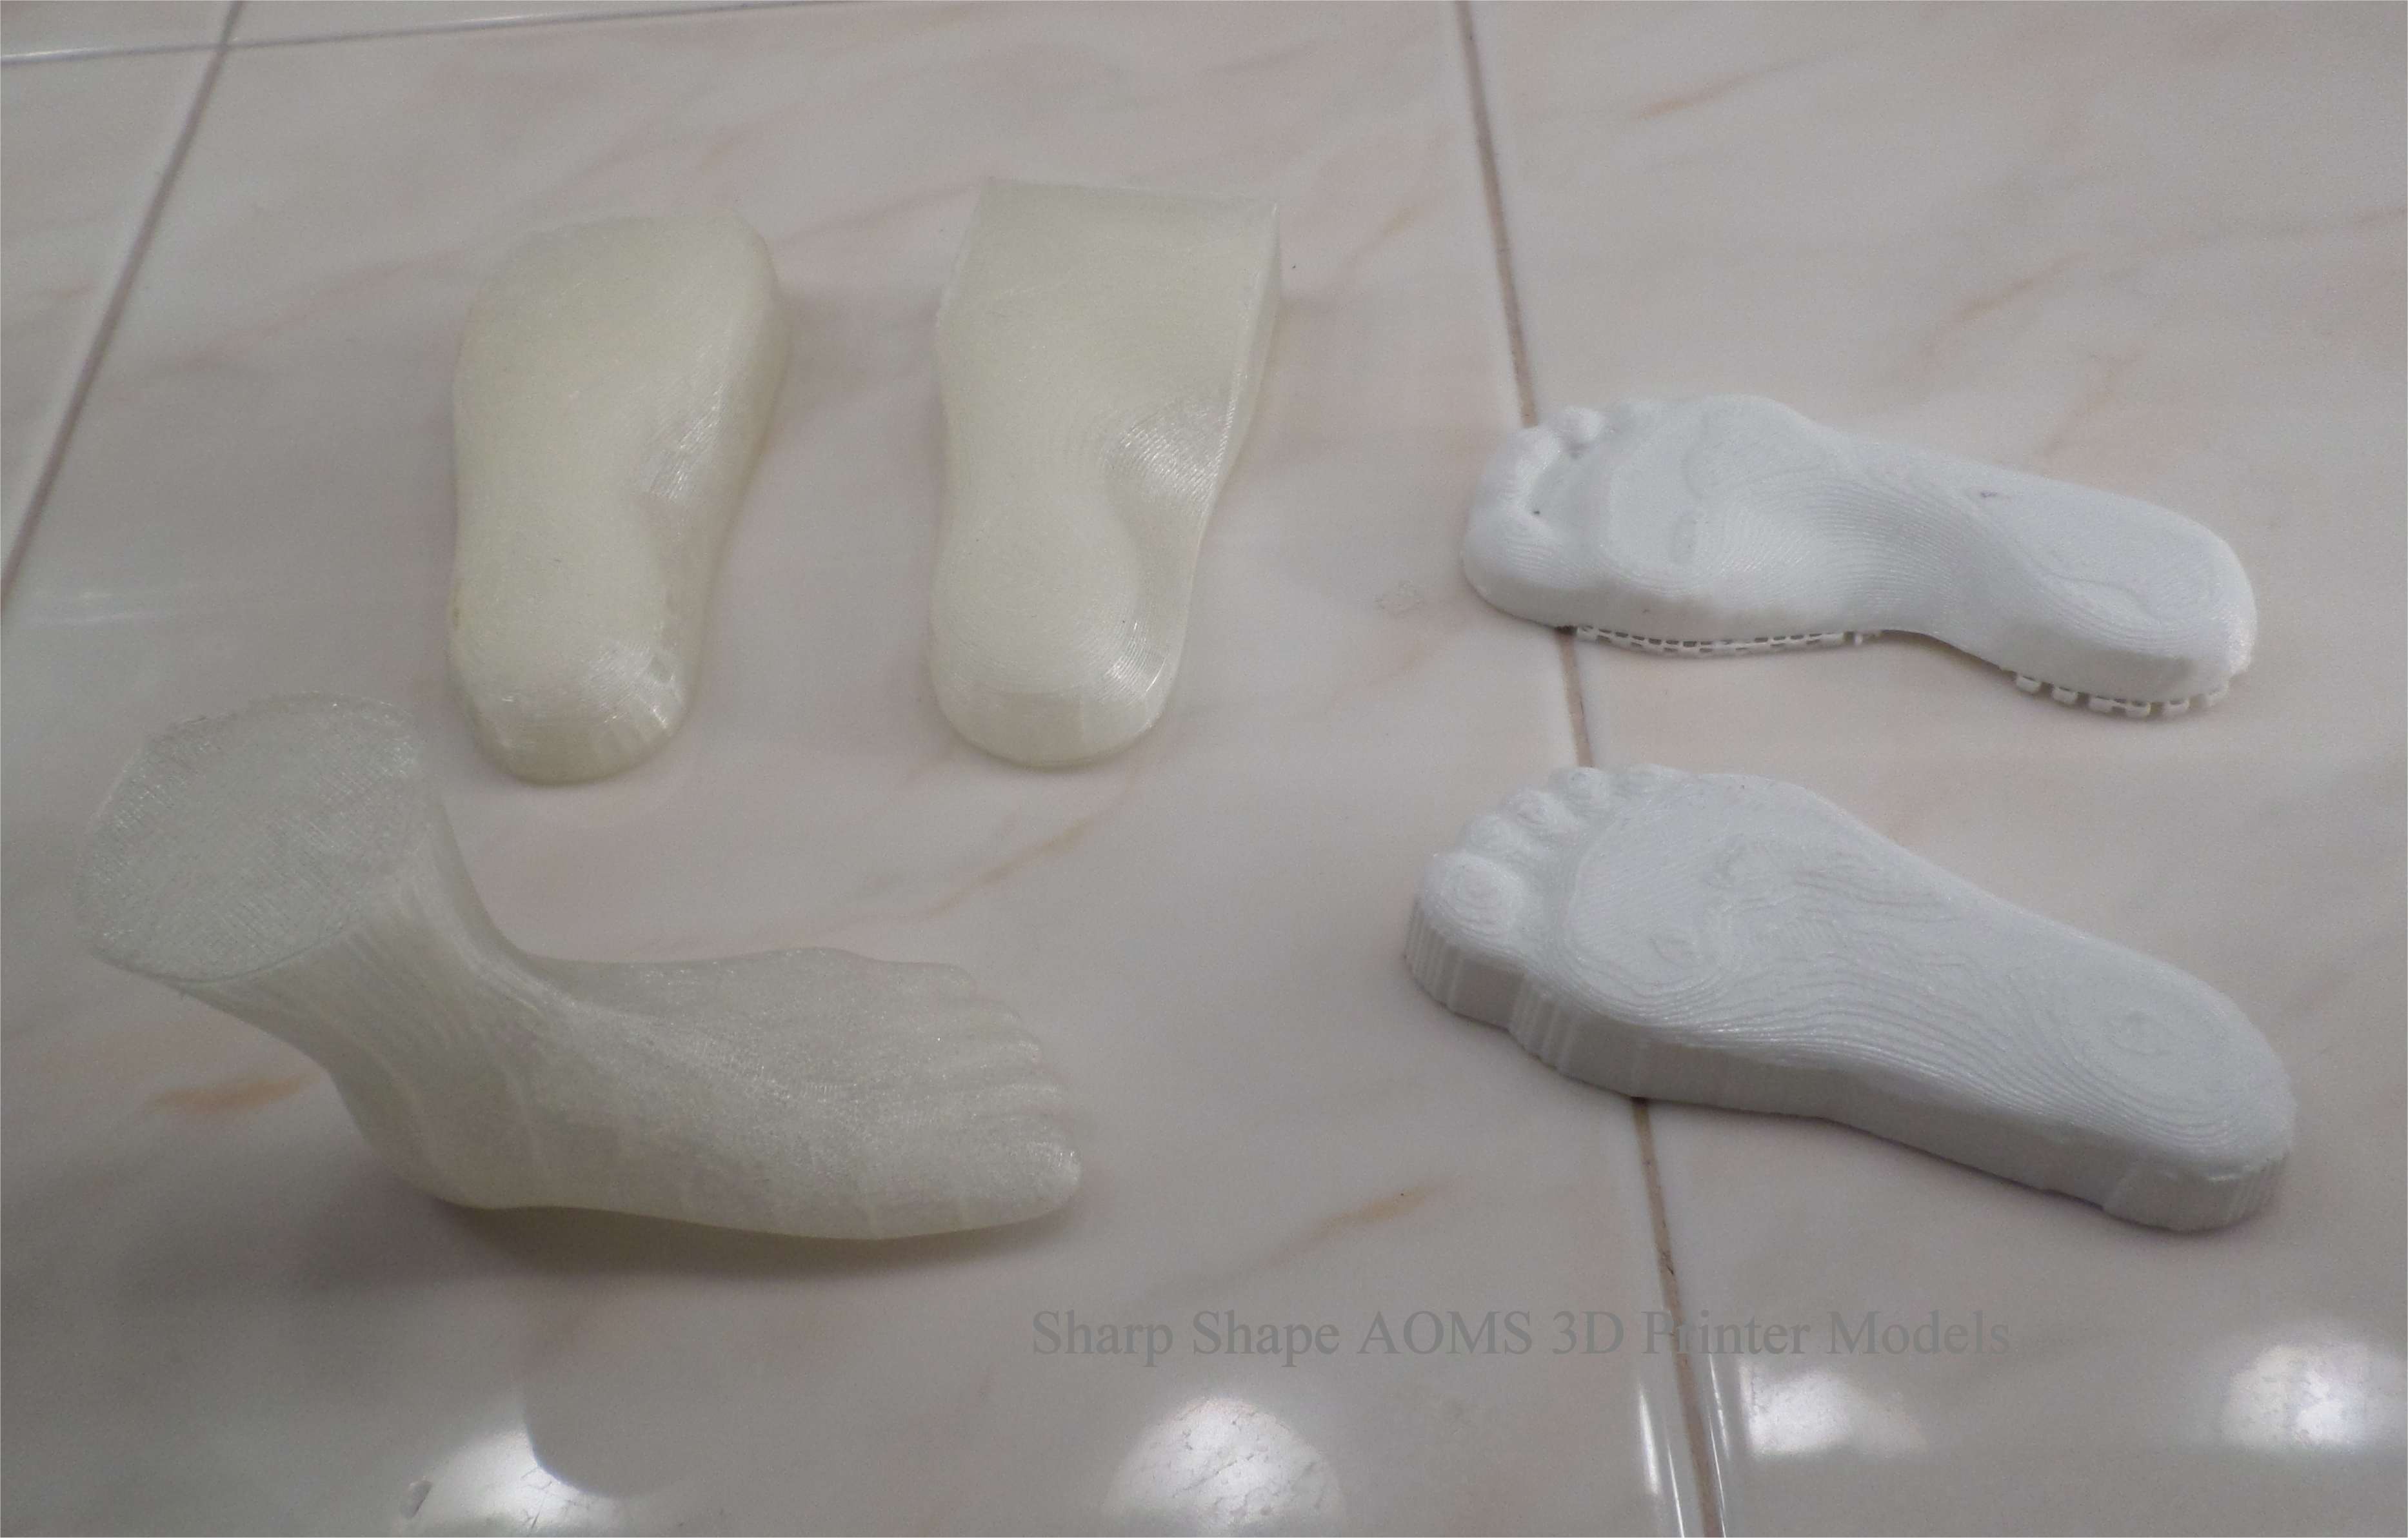 Sharp Shape AOMS 3D Printer Foot Models